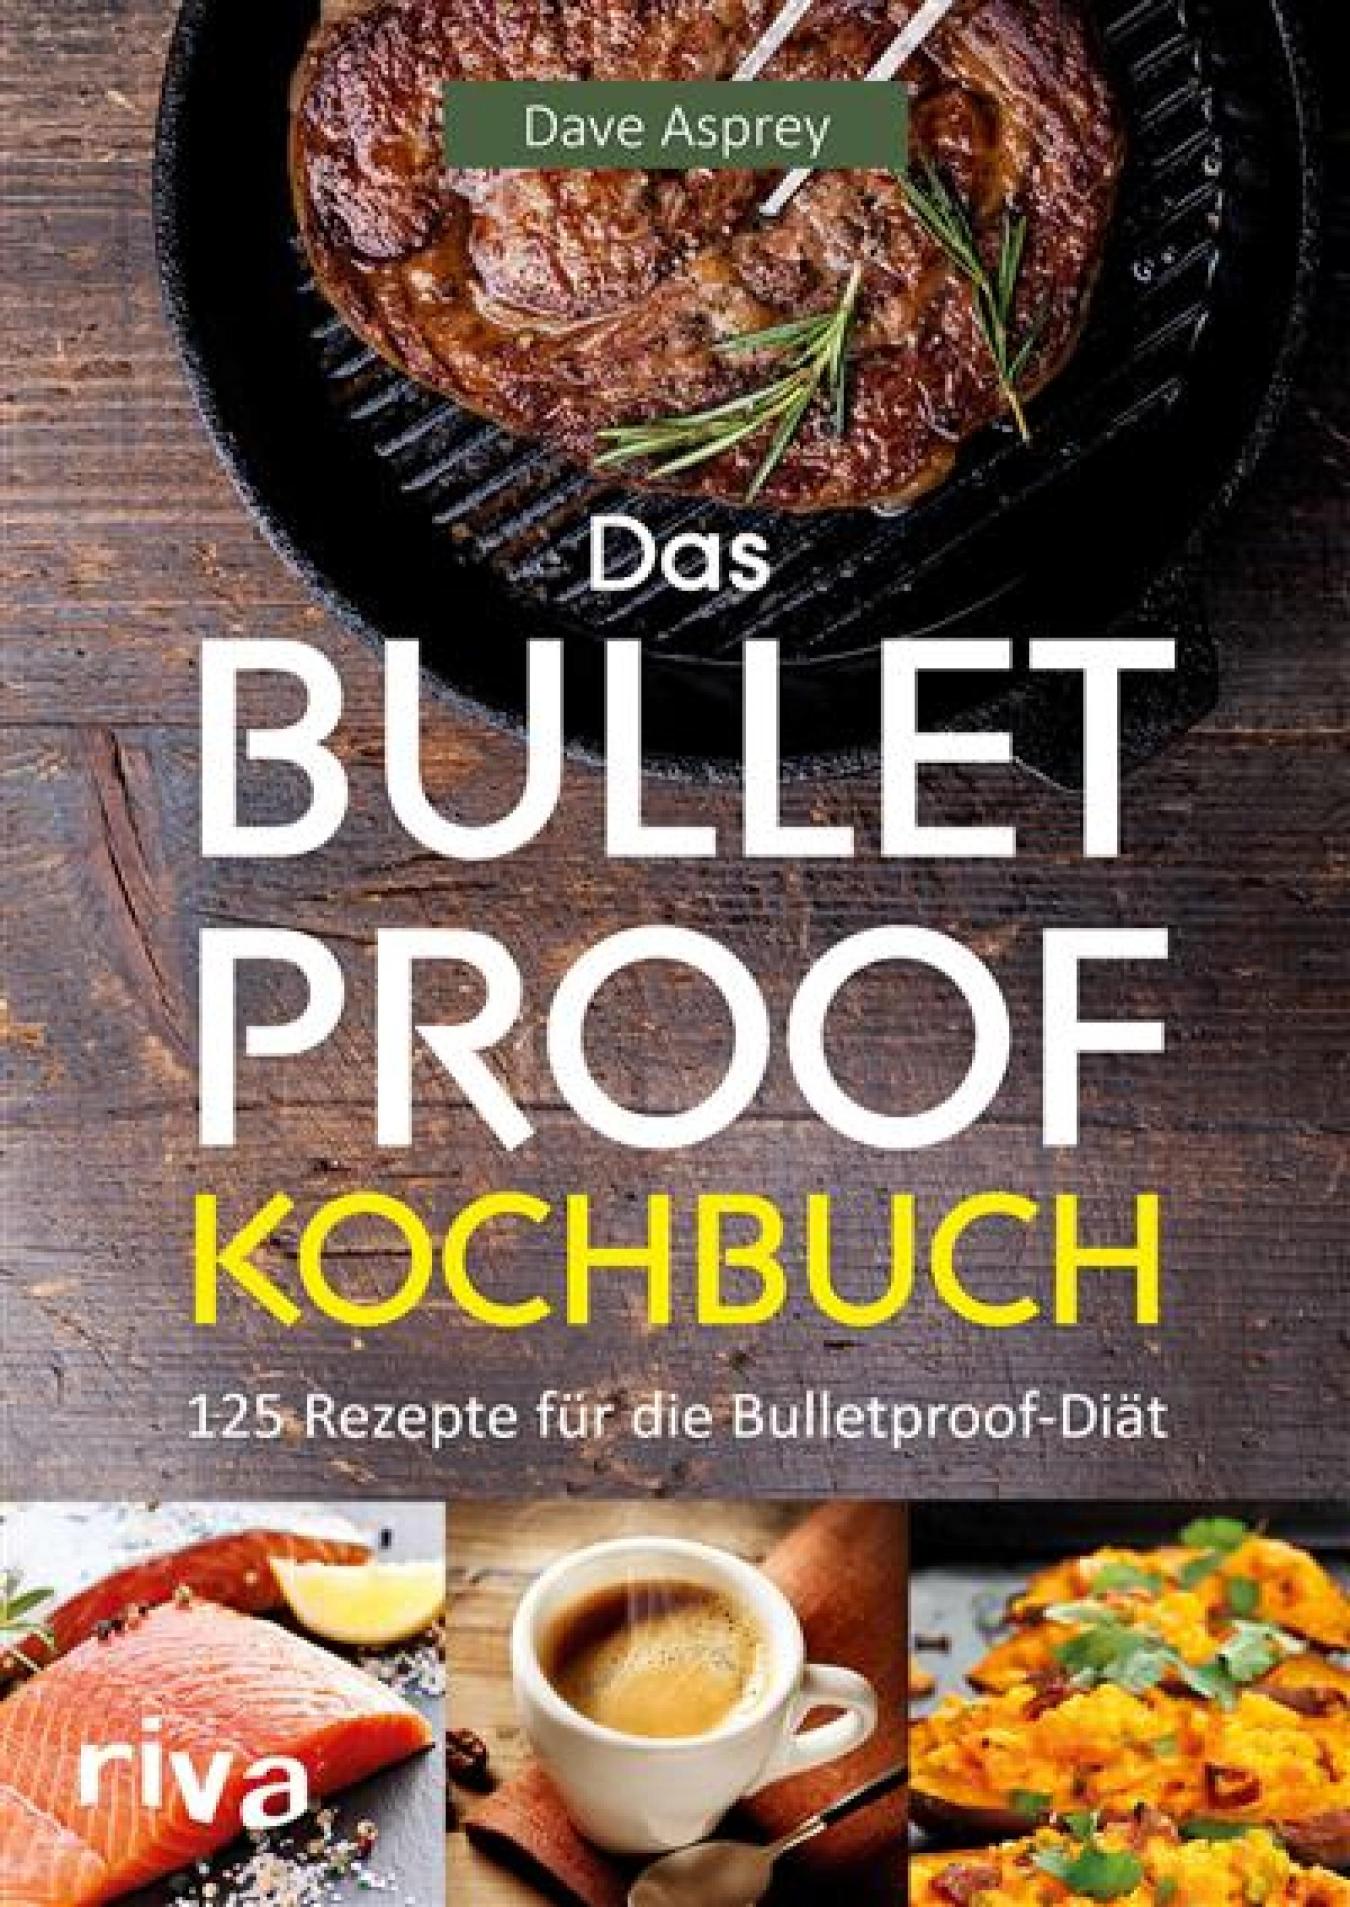 Das Bulletproof-Kochbuch 125 Rezepte für die Bulletproof-Diät